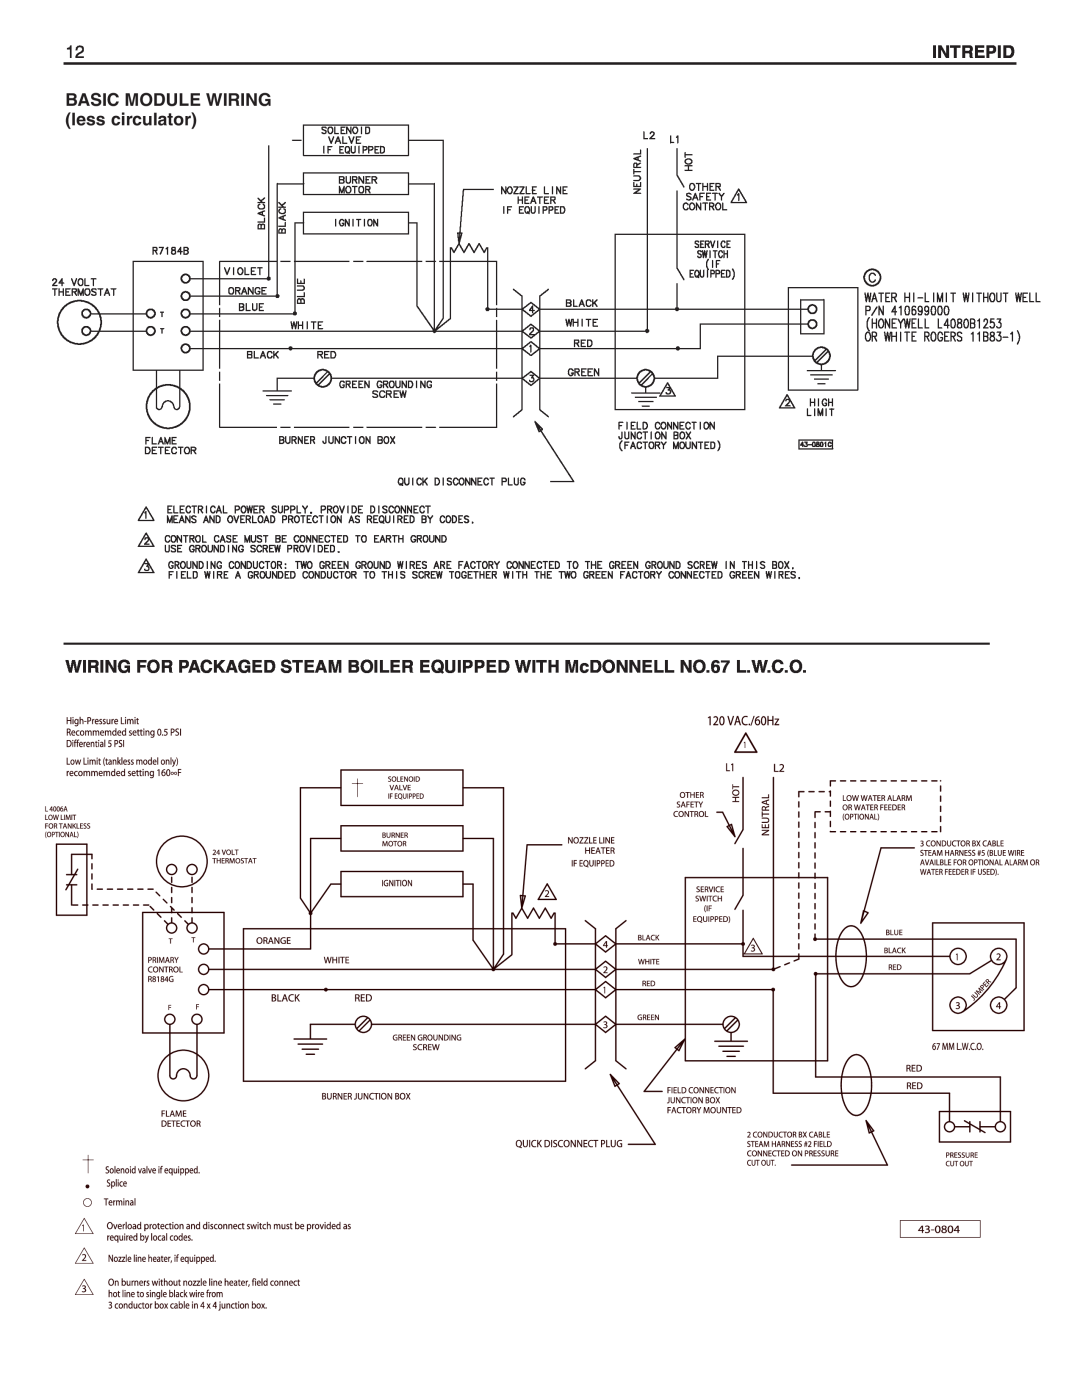 Slant/Fin Oil-fired Boiler dimensions BASIC MODULE WIRING less circulator, Intrepid 